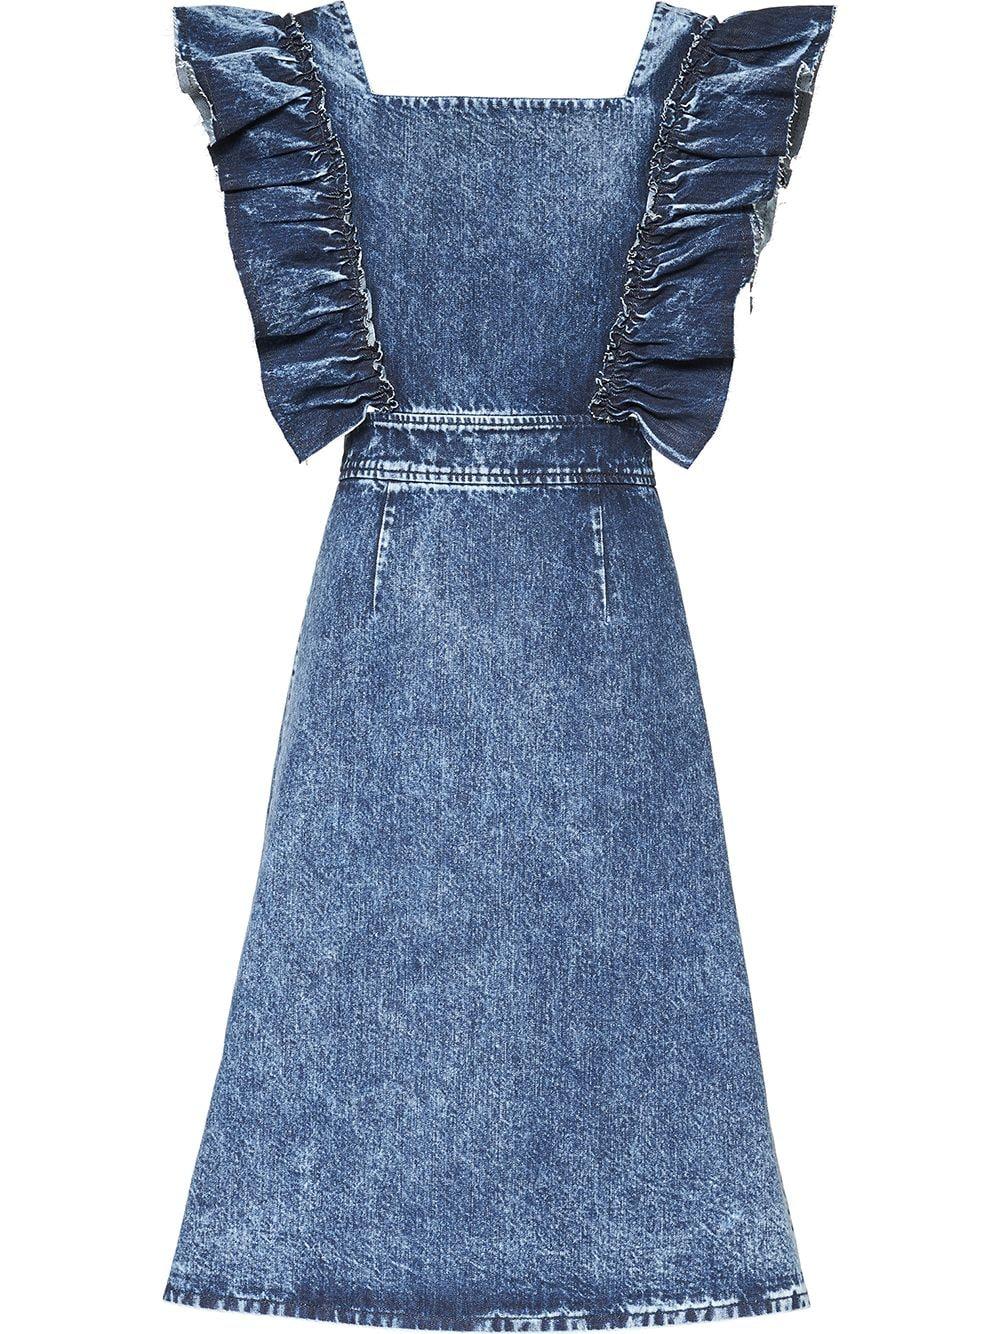 Miu Miu Ruffled Sleeve Denim Dress in Blue | Lyst Canada